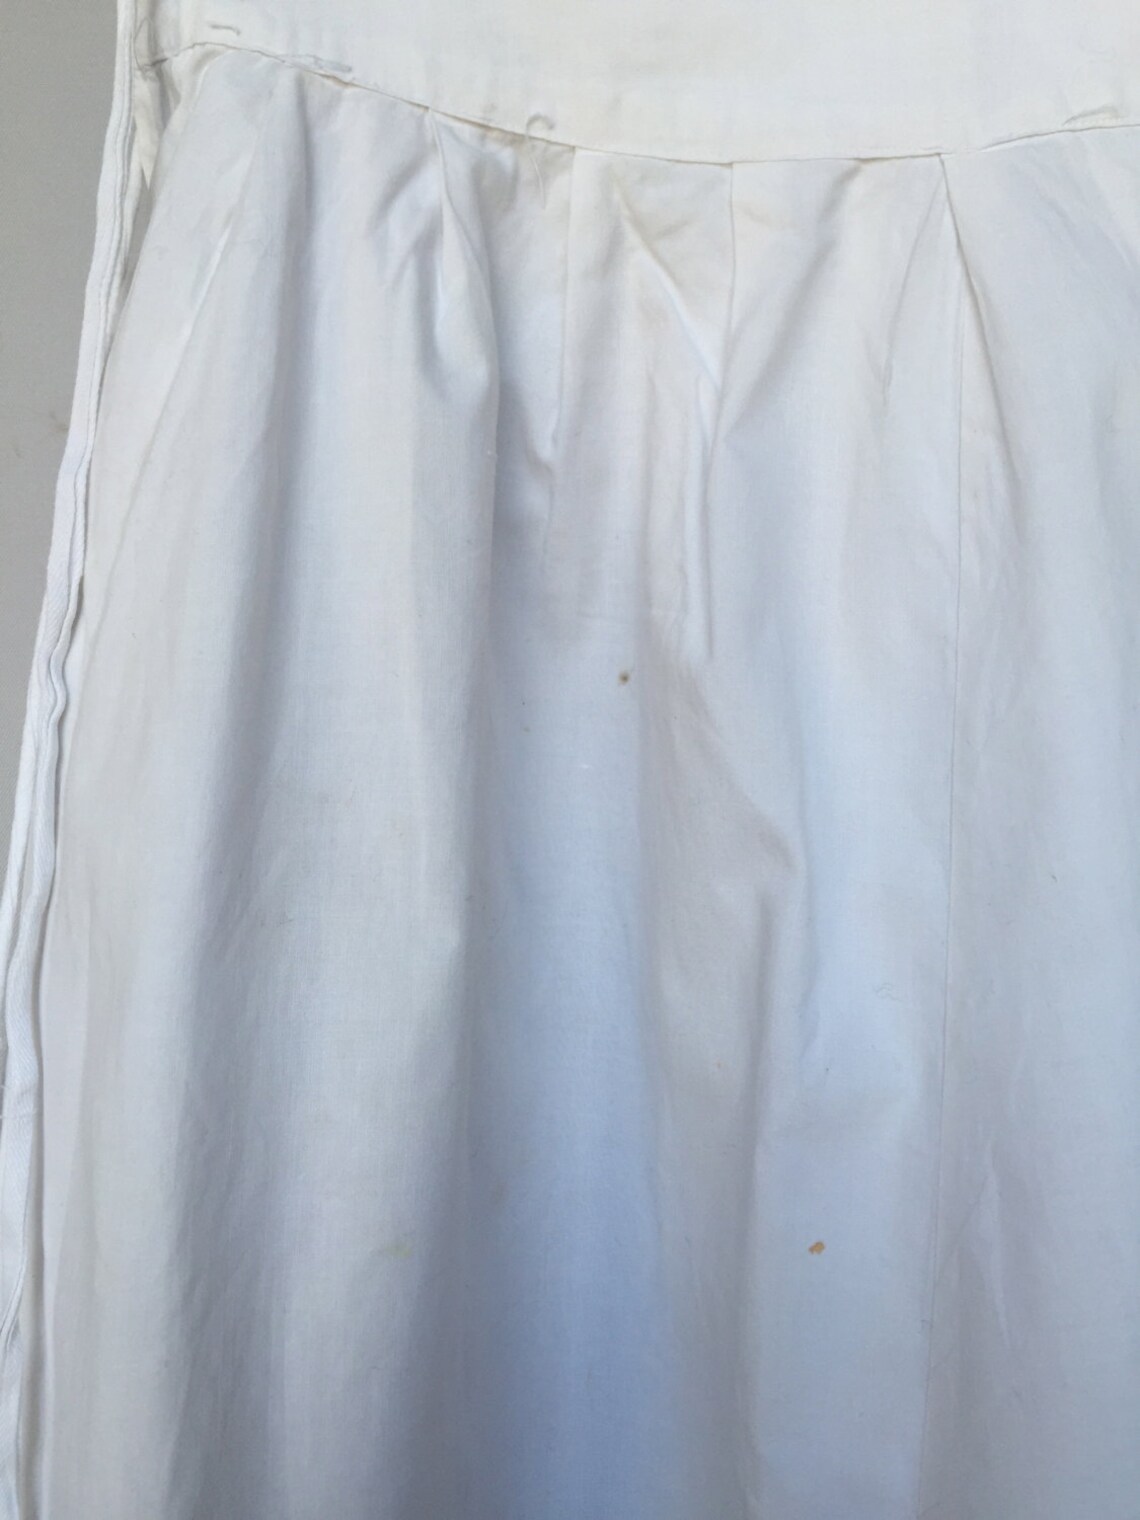 50's White Cotton Lace Plain Long Skirt Vintage Summer - Etsy